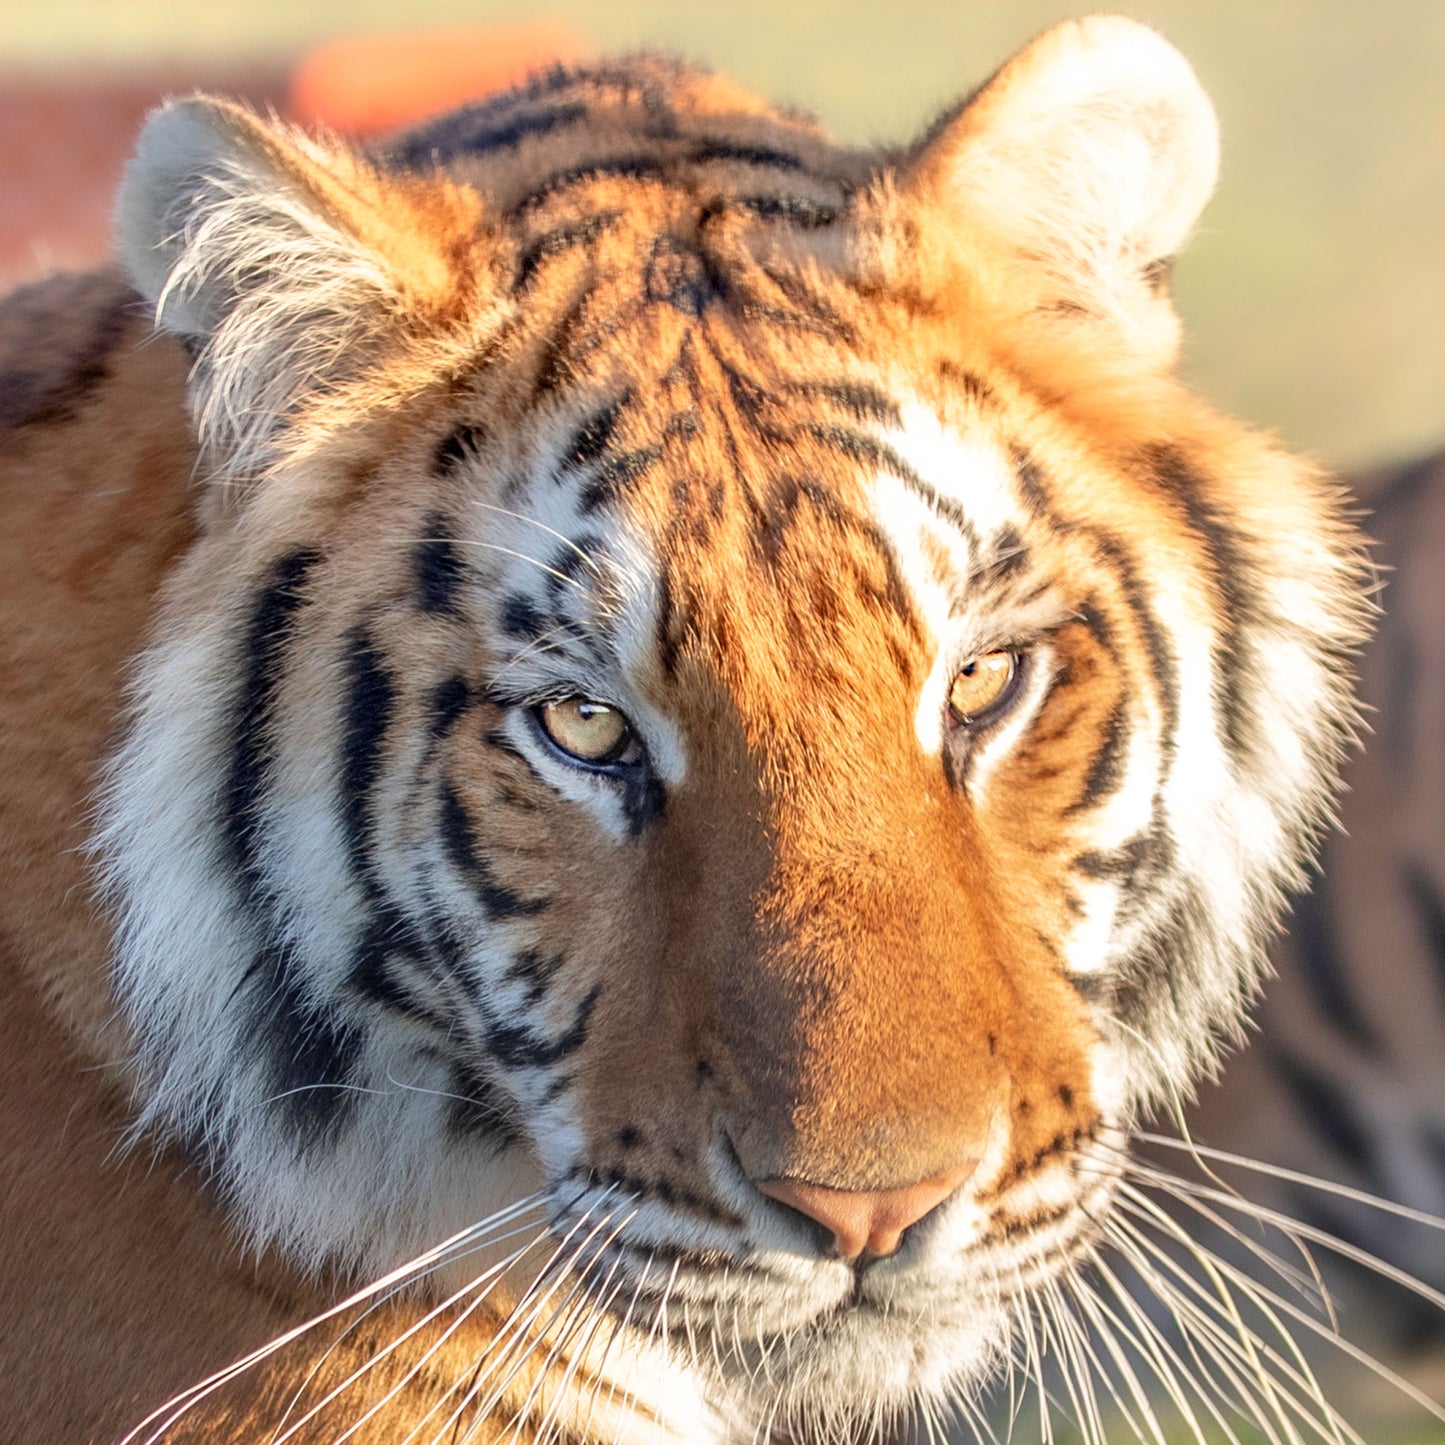 Tiger adoption - standard